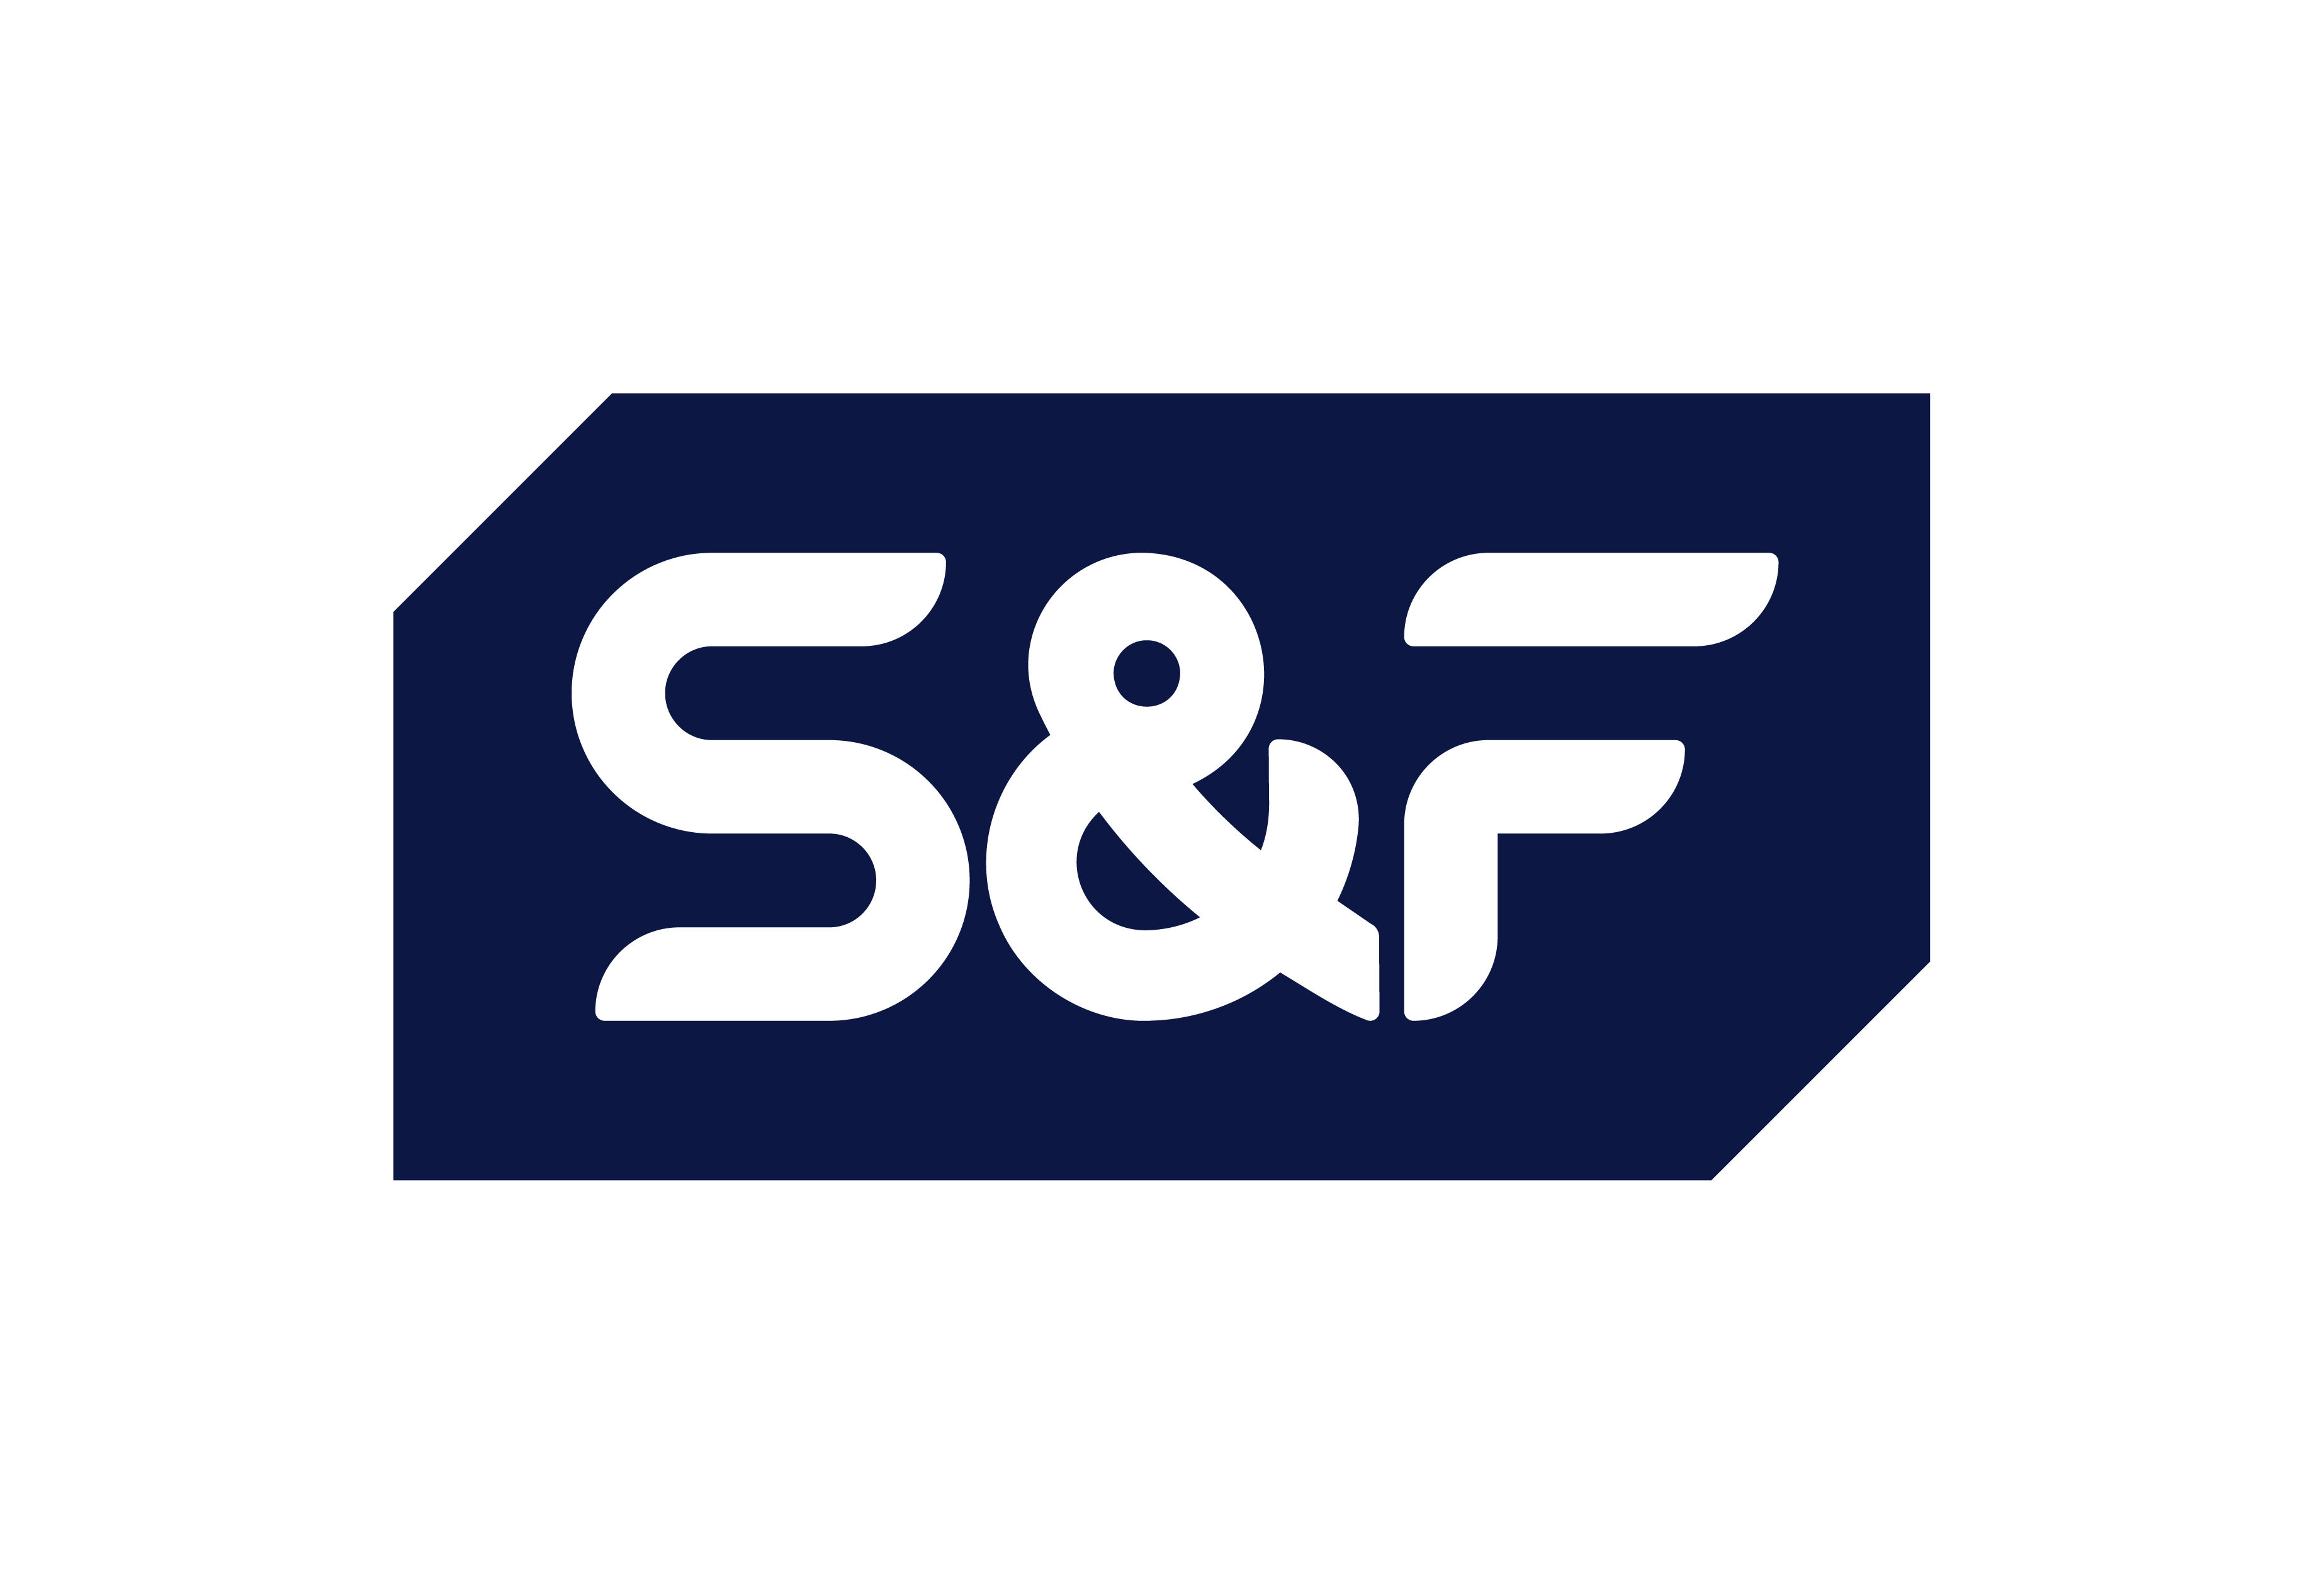 S&F Datentechnik GmbH